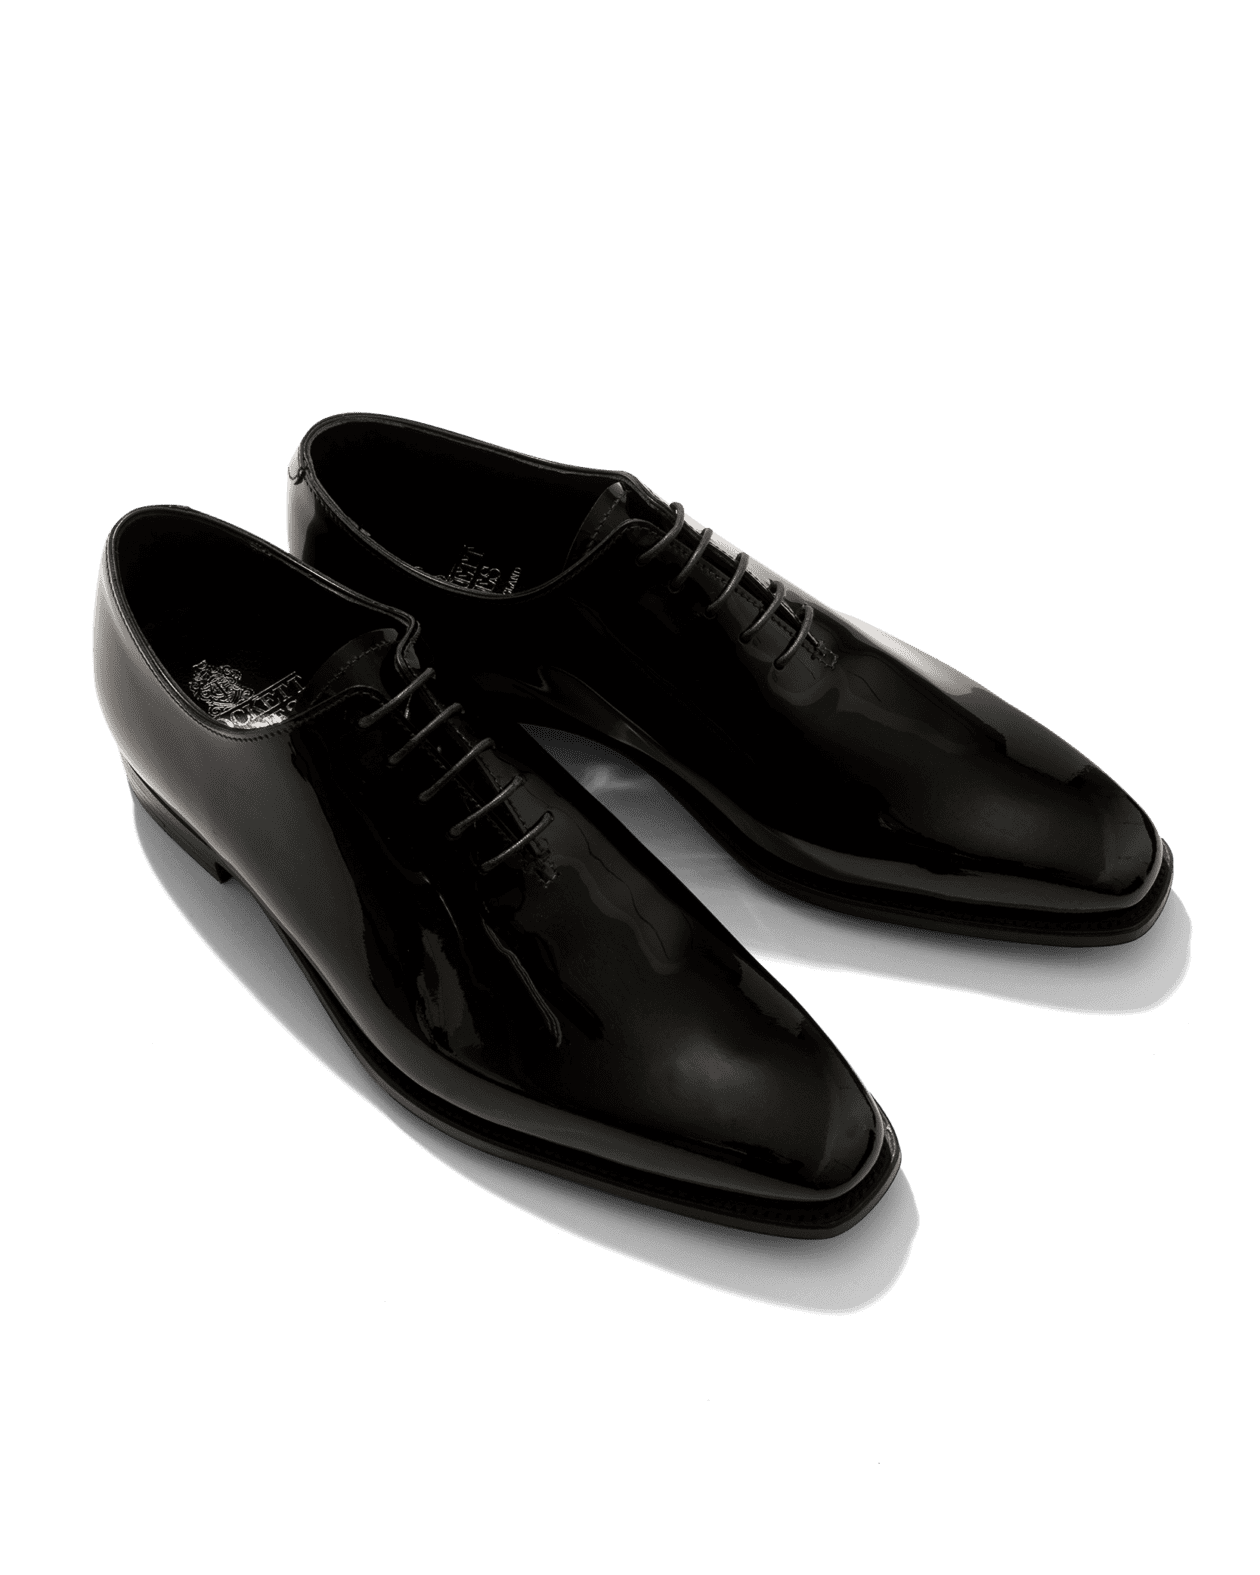 Crockett & Jones Alex Black Patent Oxford Shoes